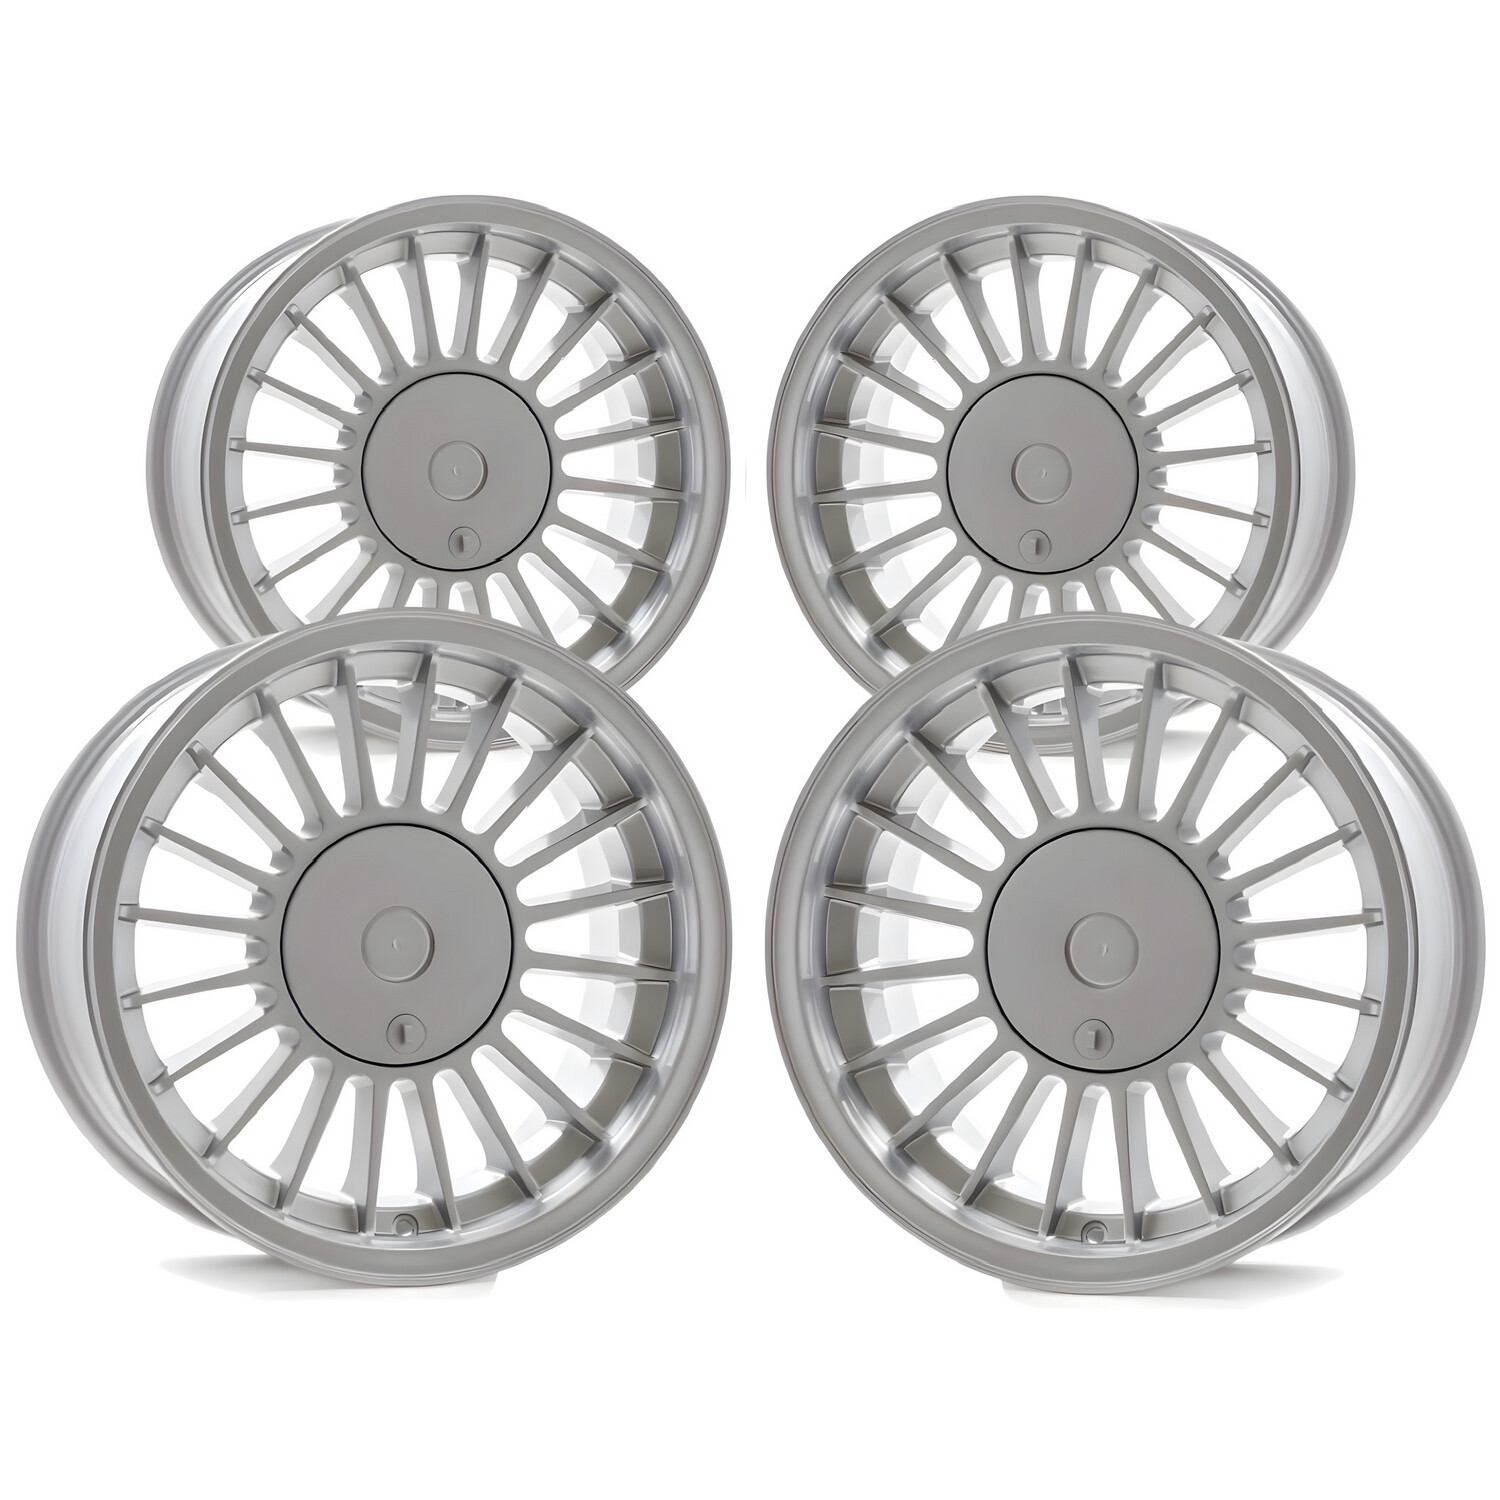 16" Maxilite Alpina Classic Softline Style Wheels (4x100 16x8 ET28)